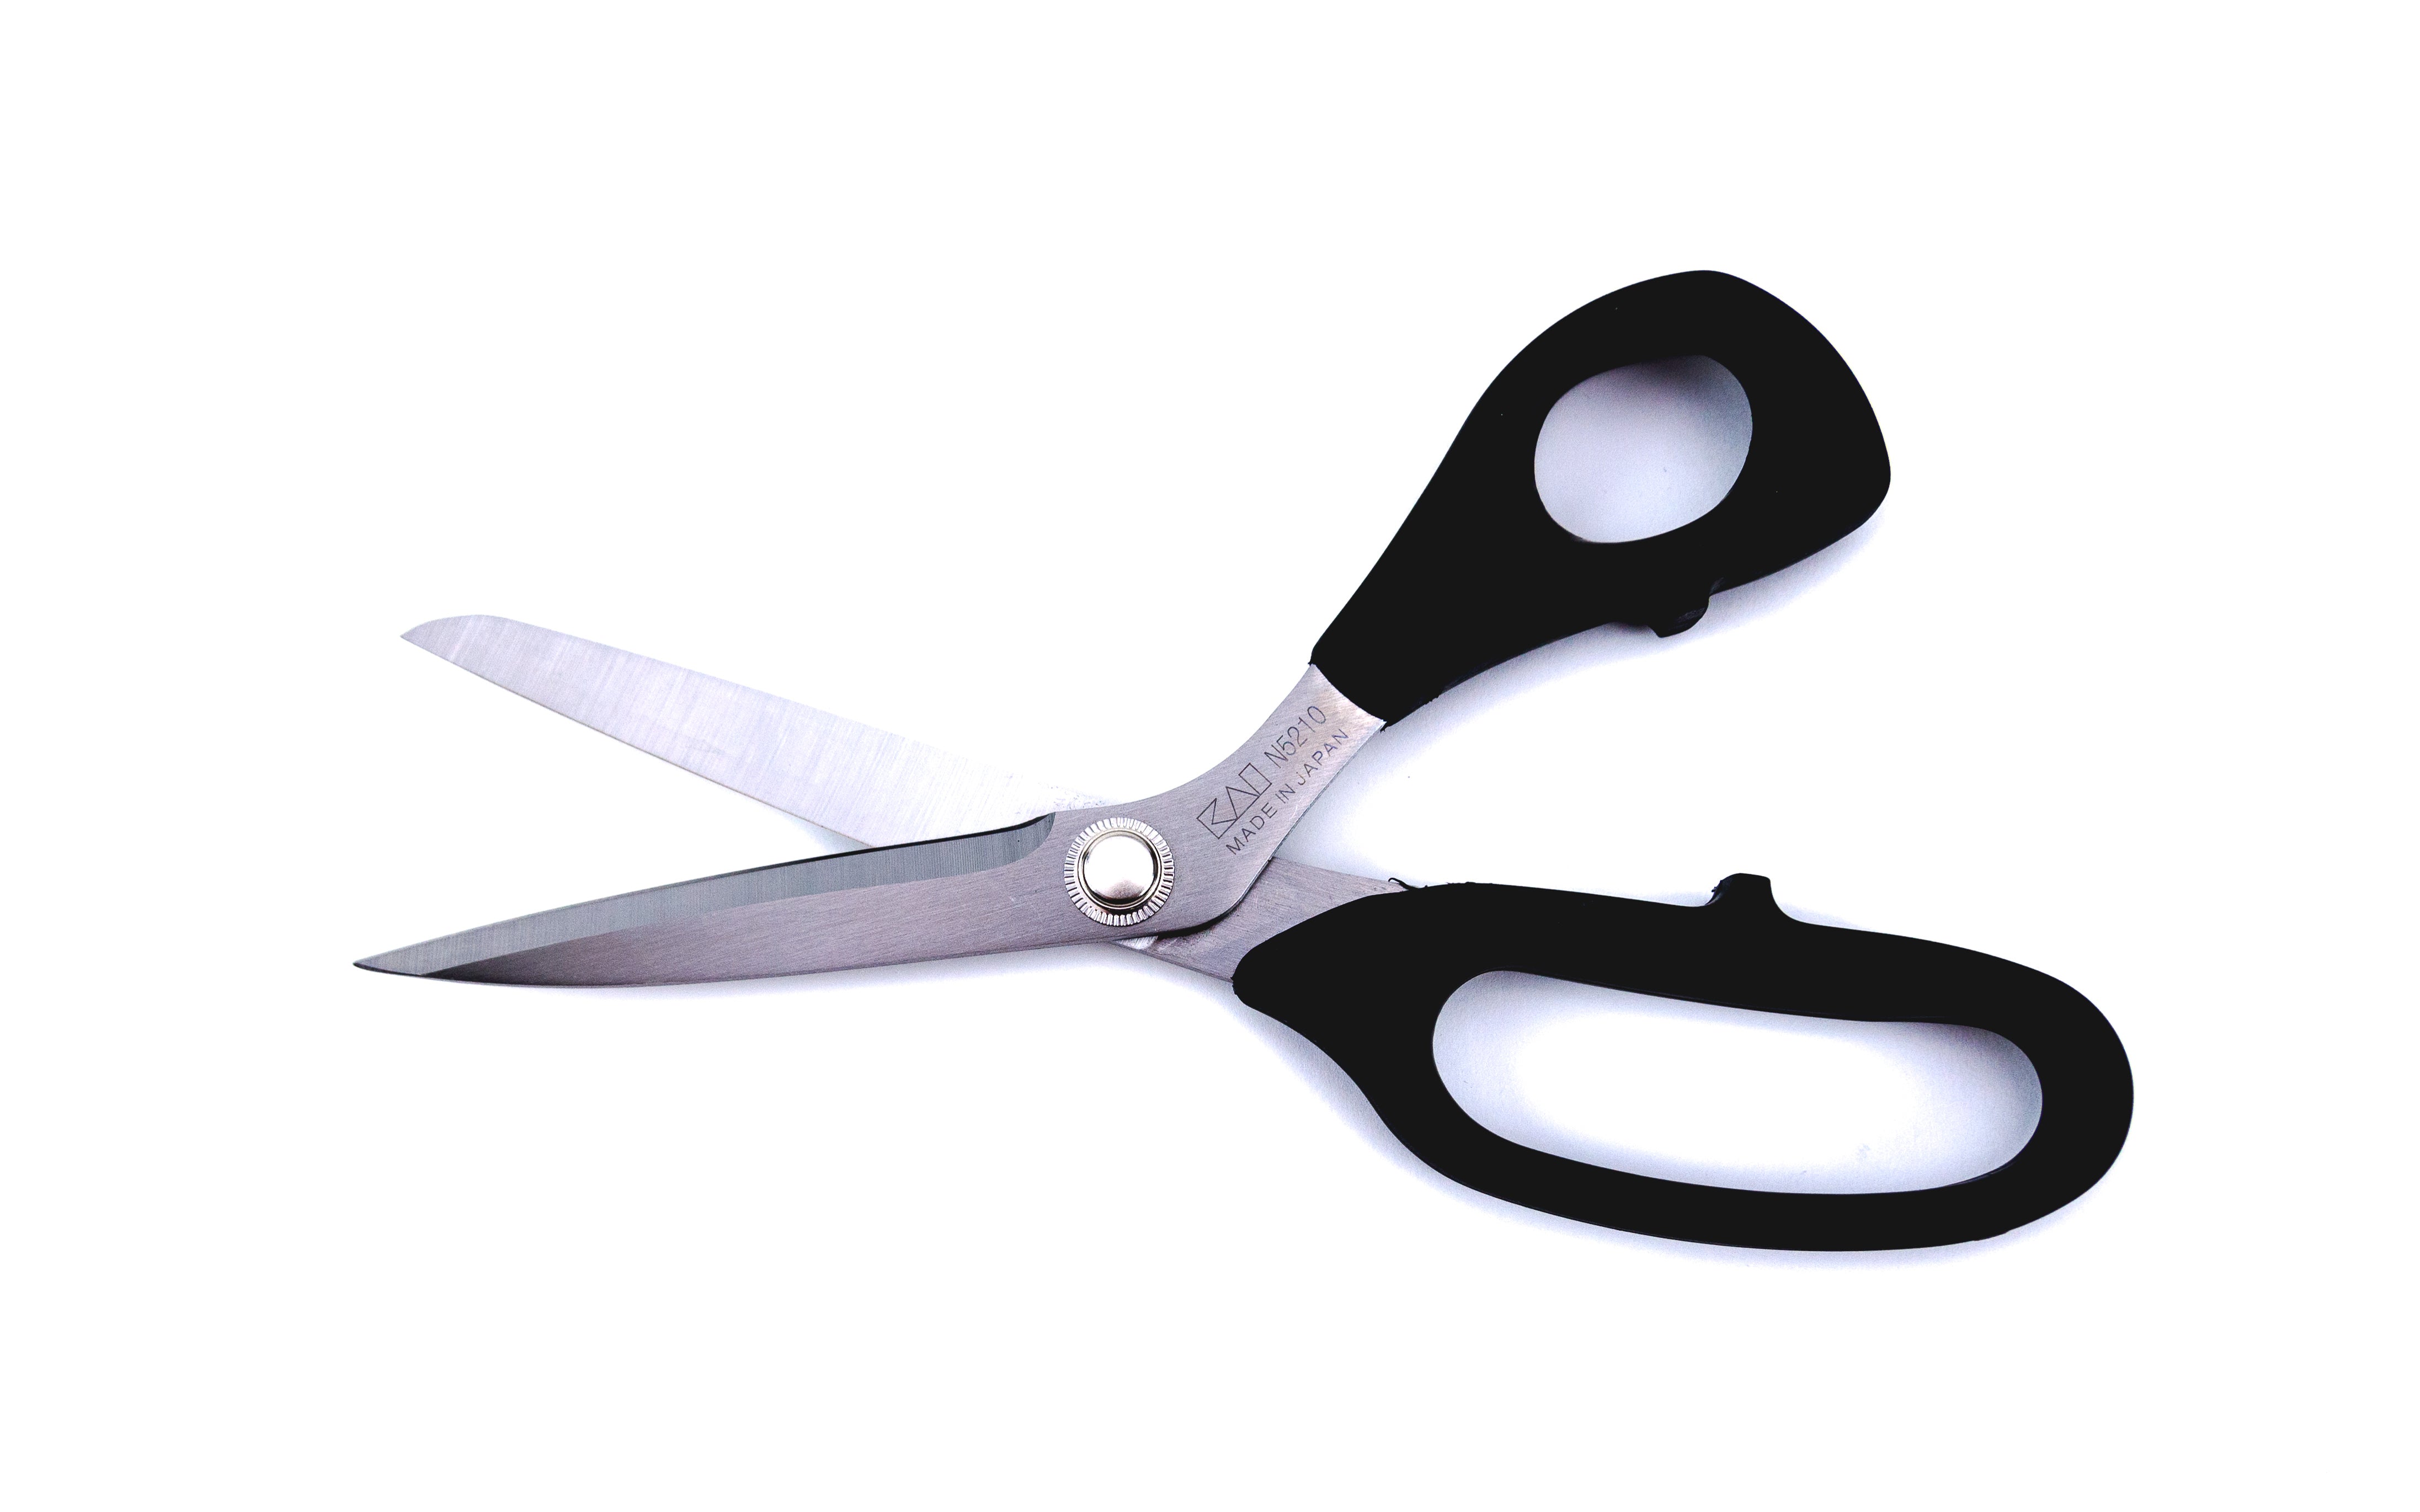 KAI 3200, 8 Inch Paper Scissors - Excellent to cut manila pattern